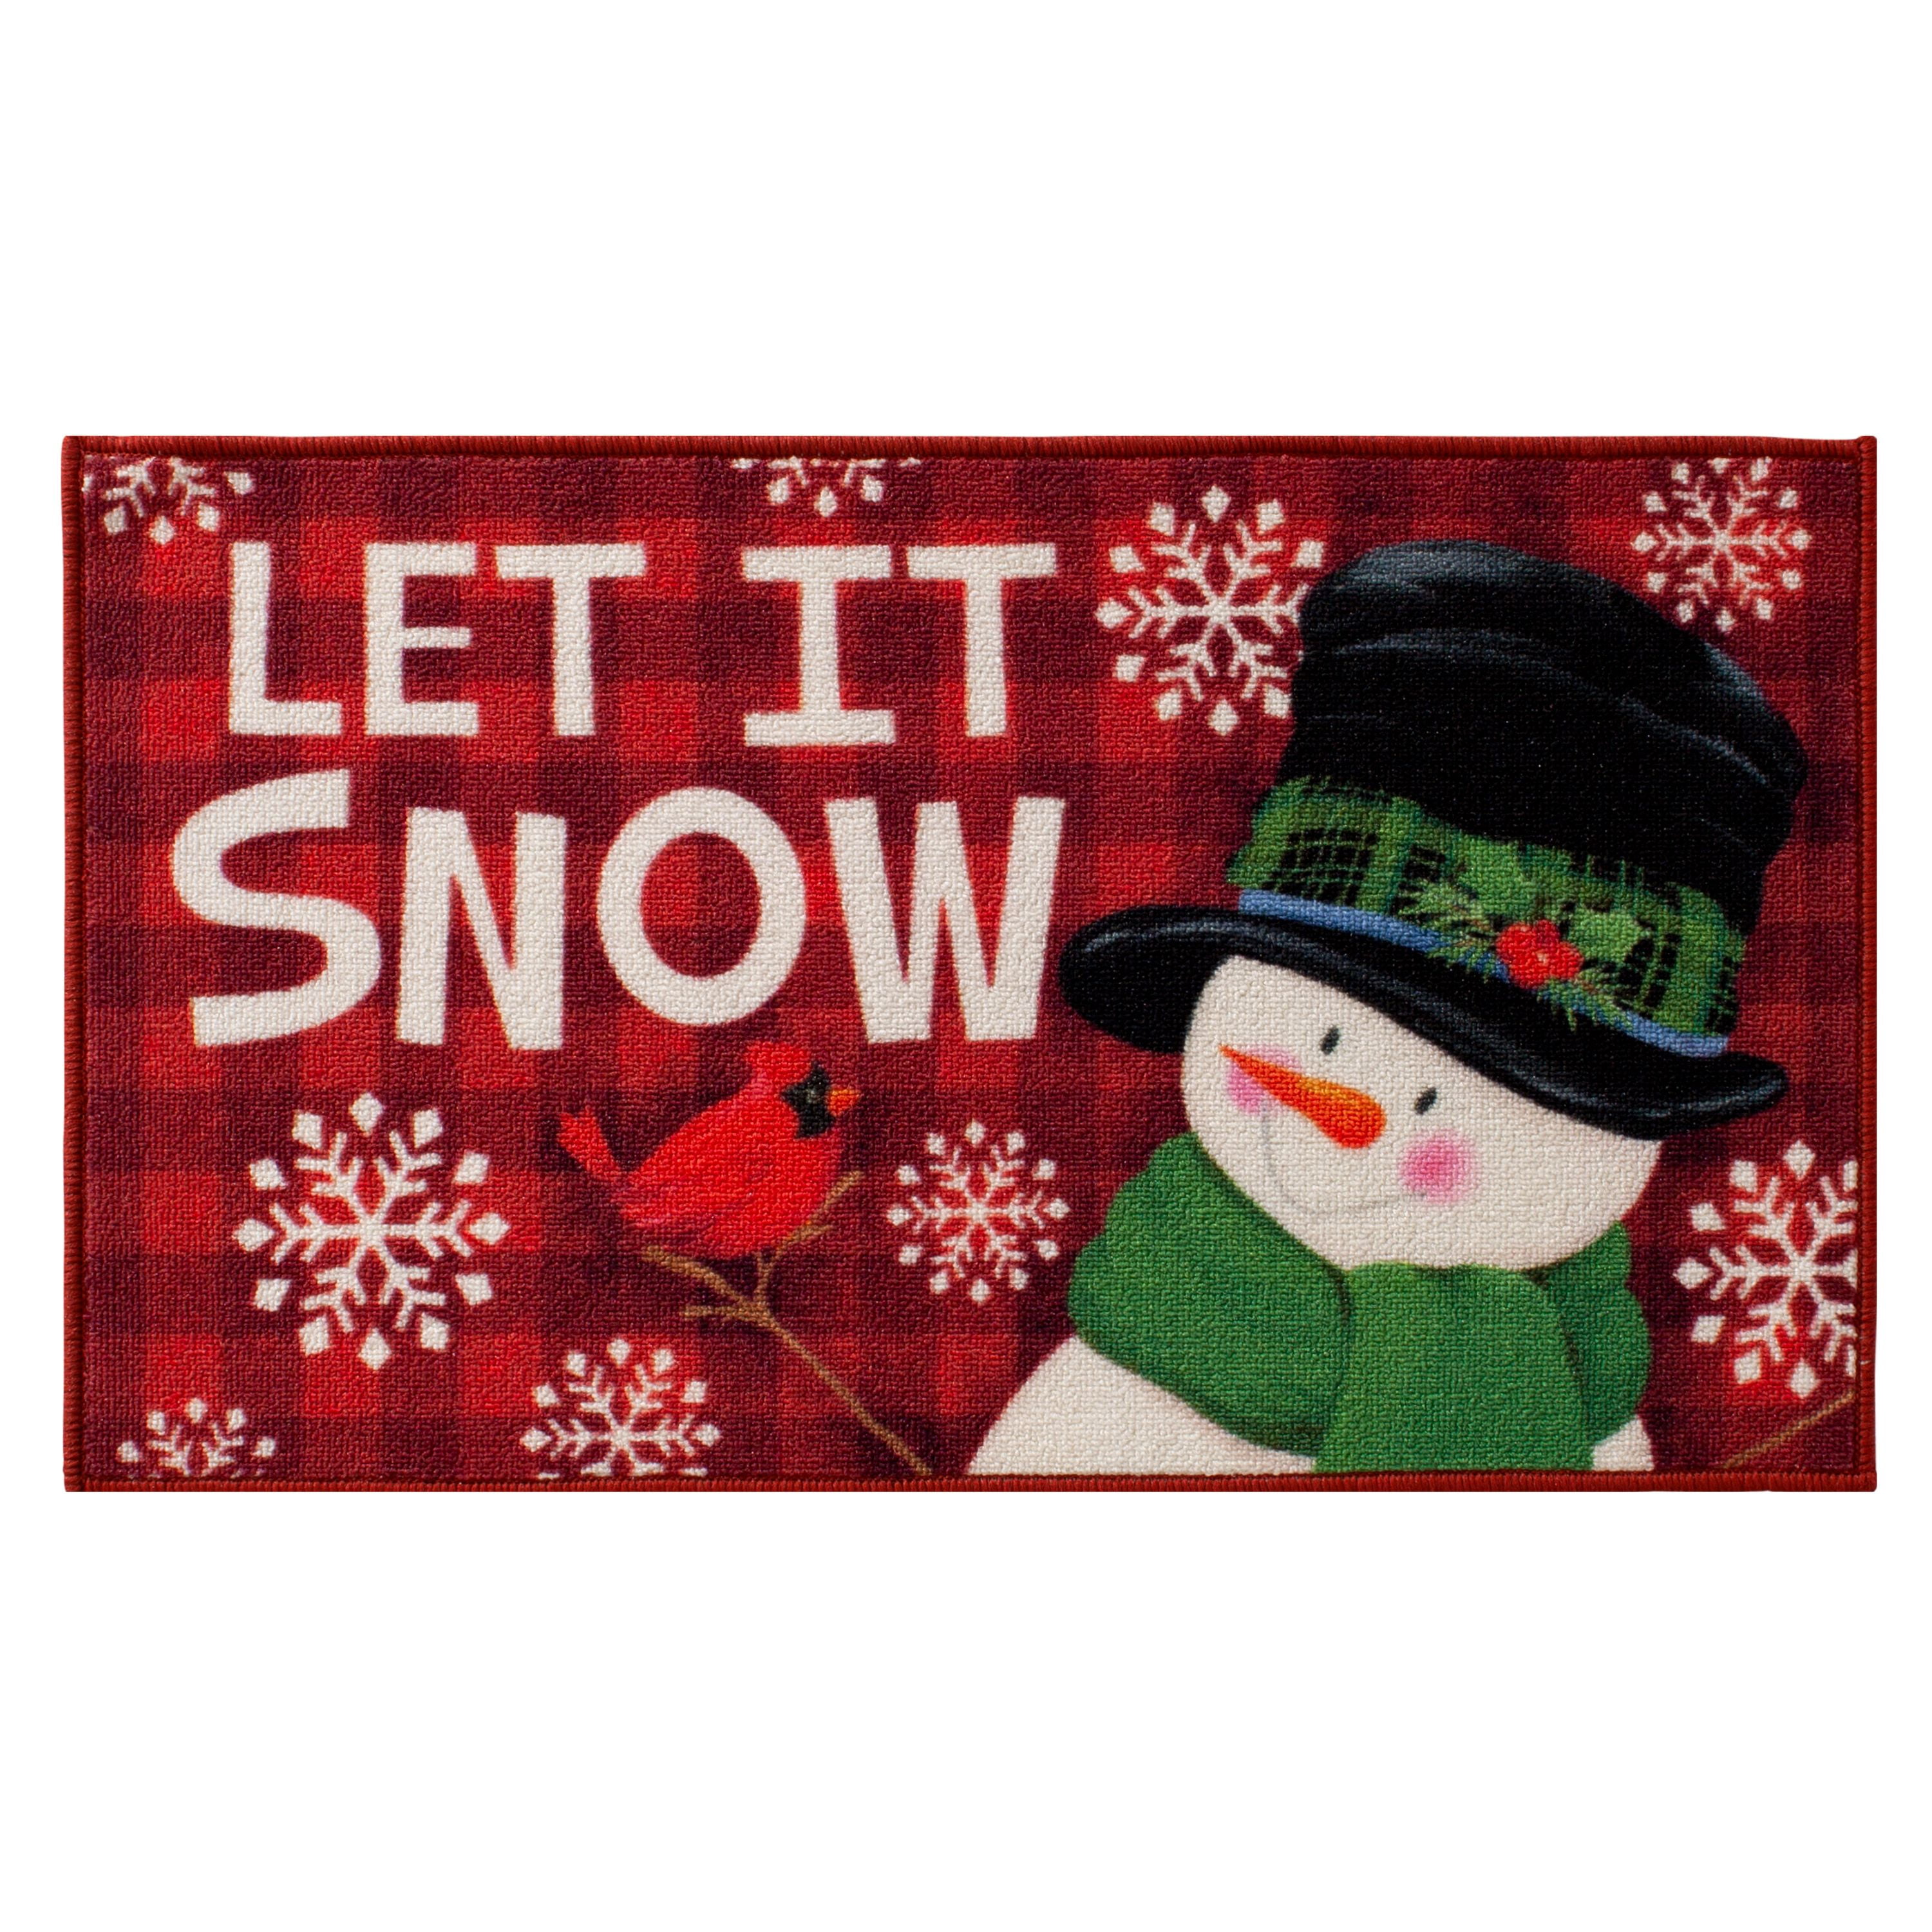 2 SNOWMEN PRINTED NYLON RUG,18"x30" WINTER Cat MARRY CHRISTMAS nonskid back